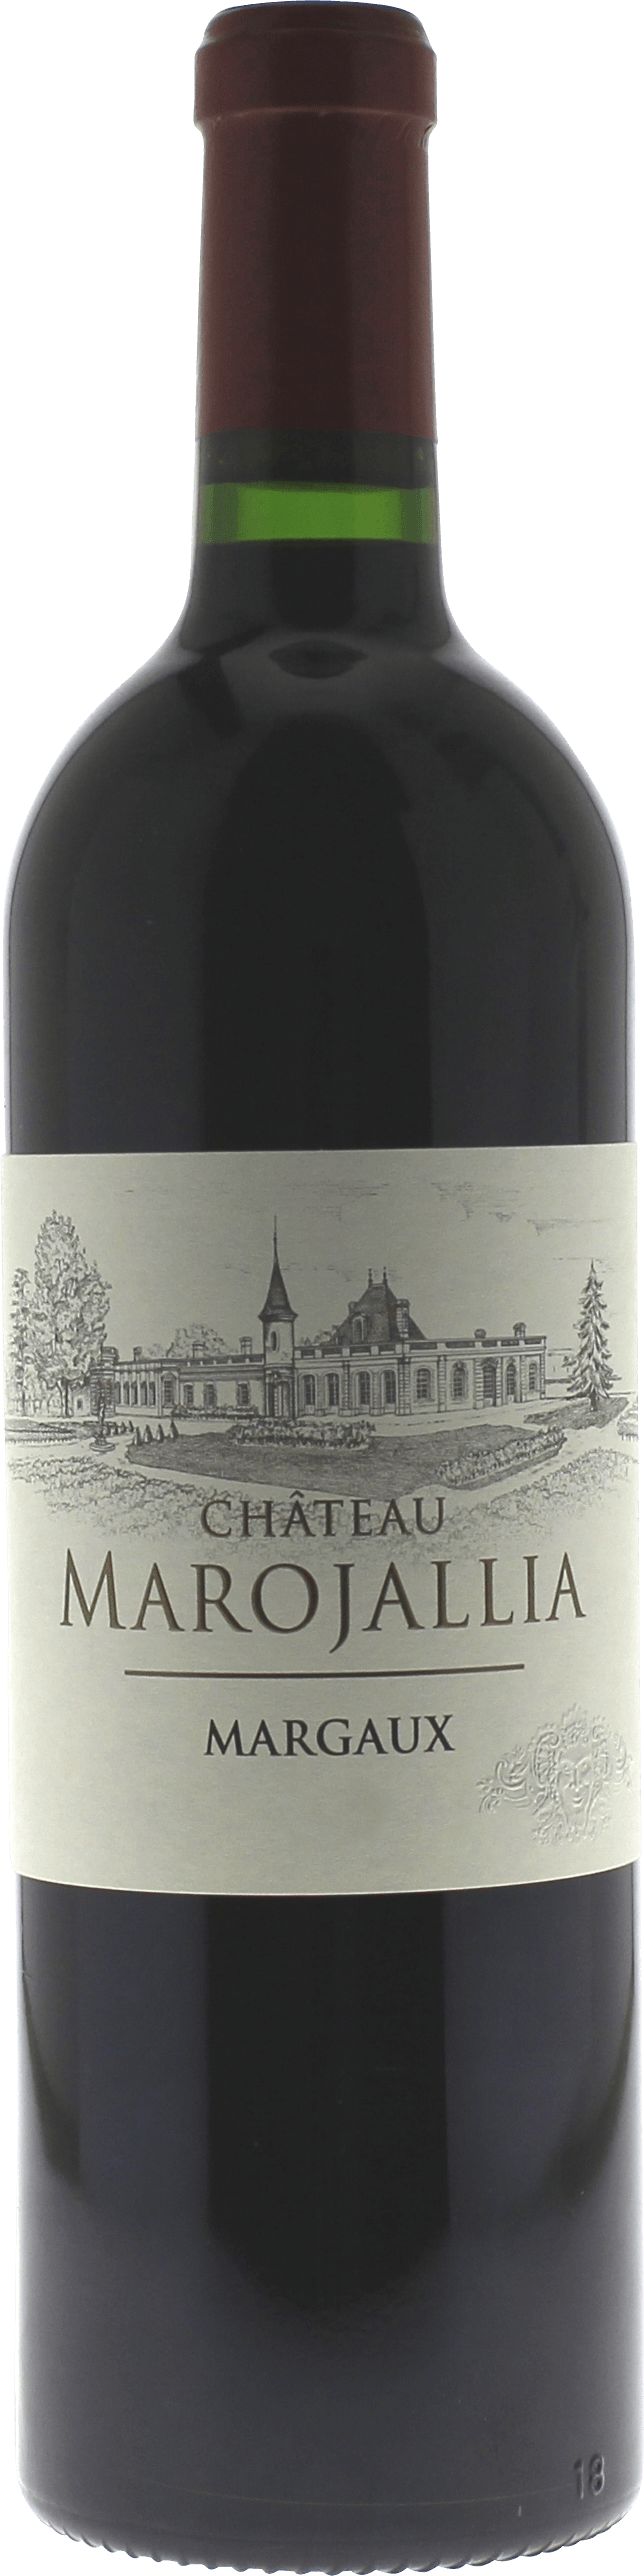 Marojallia 2017  Margaux, Bordeaux rouge